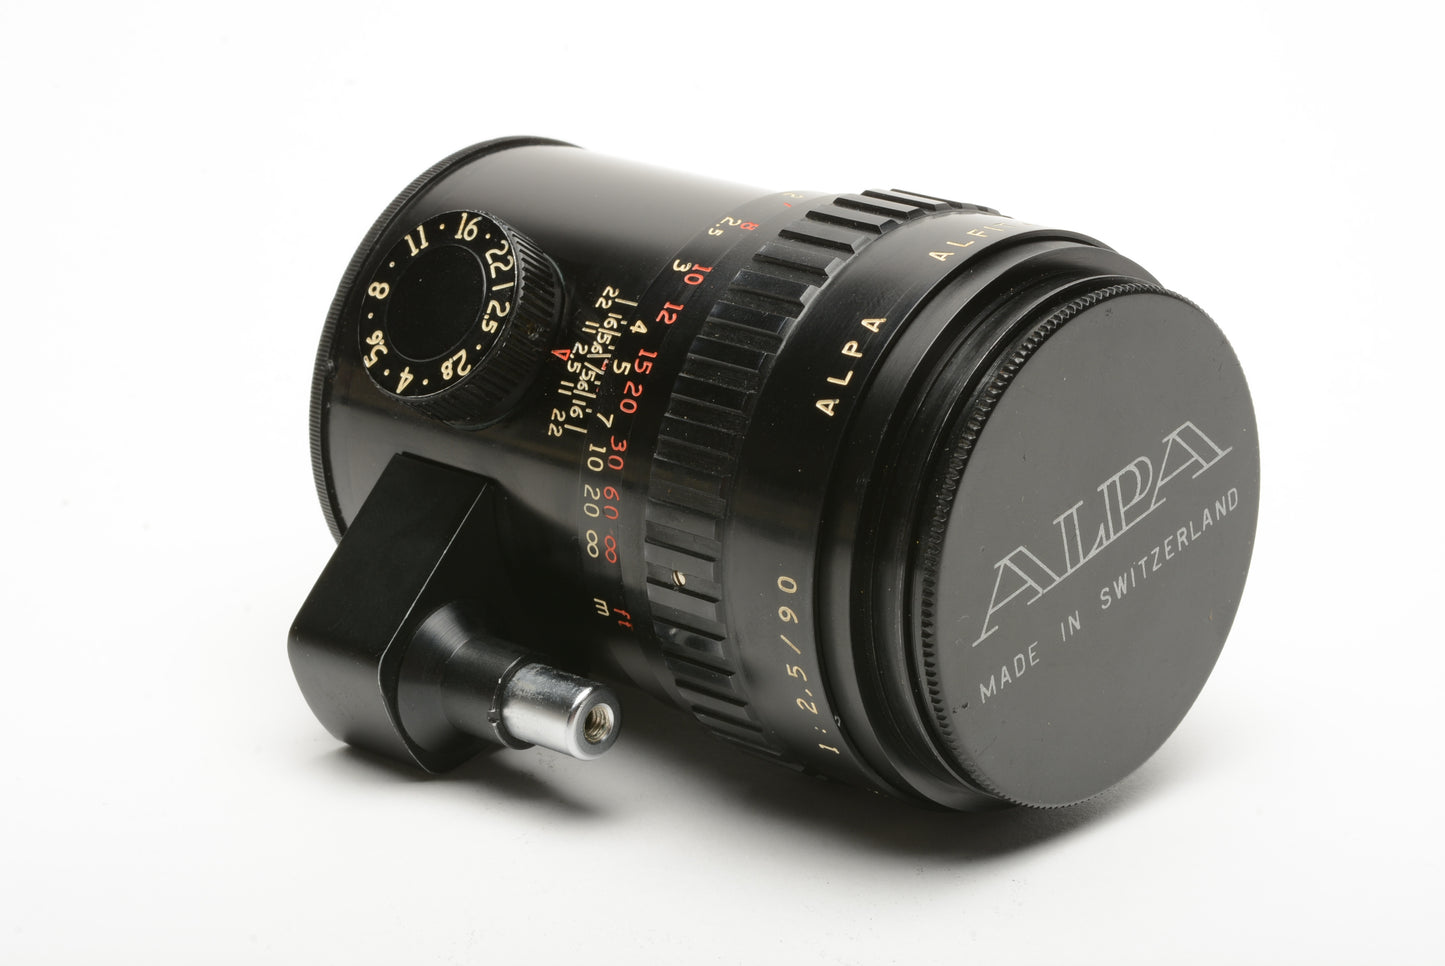 Alpa Alfitar P. Angenieux 90mm f2 lens, caps, clean & sharp!